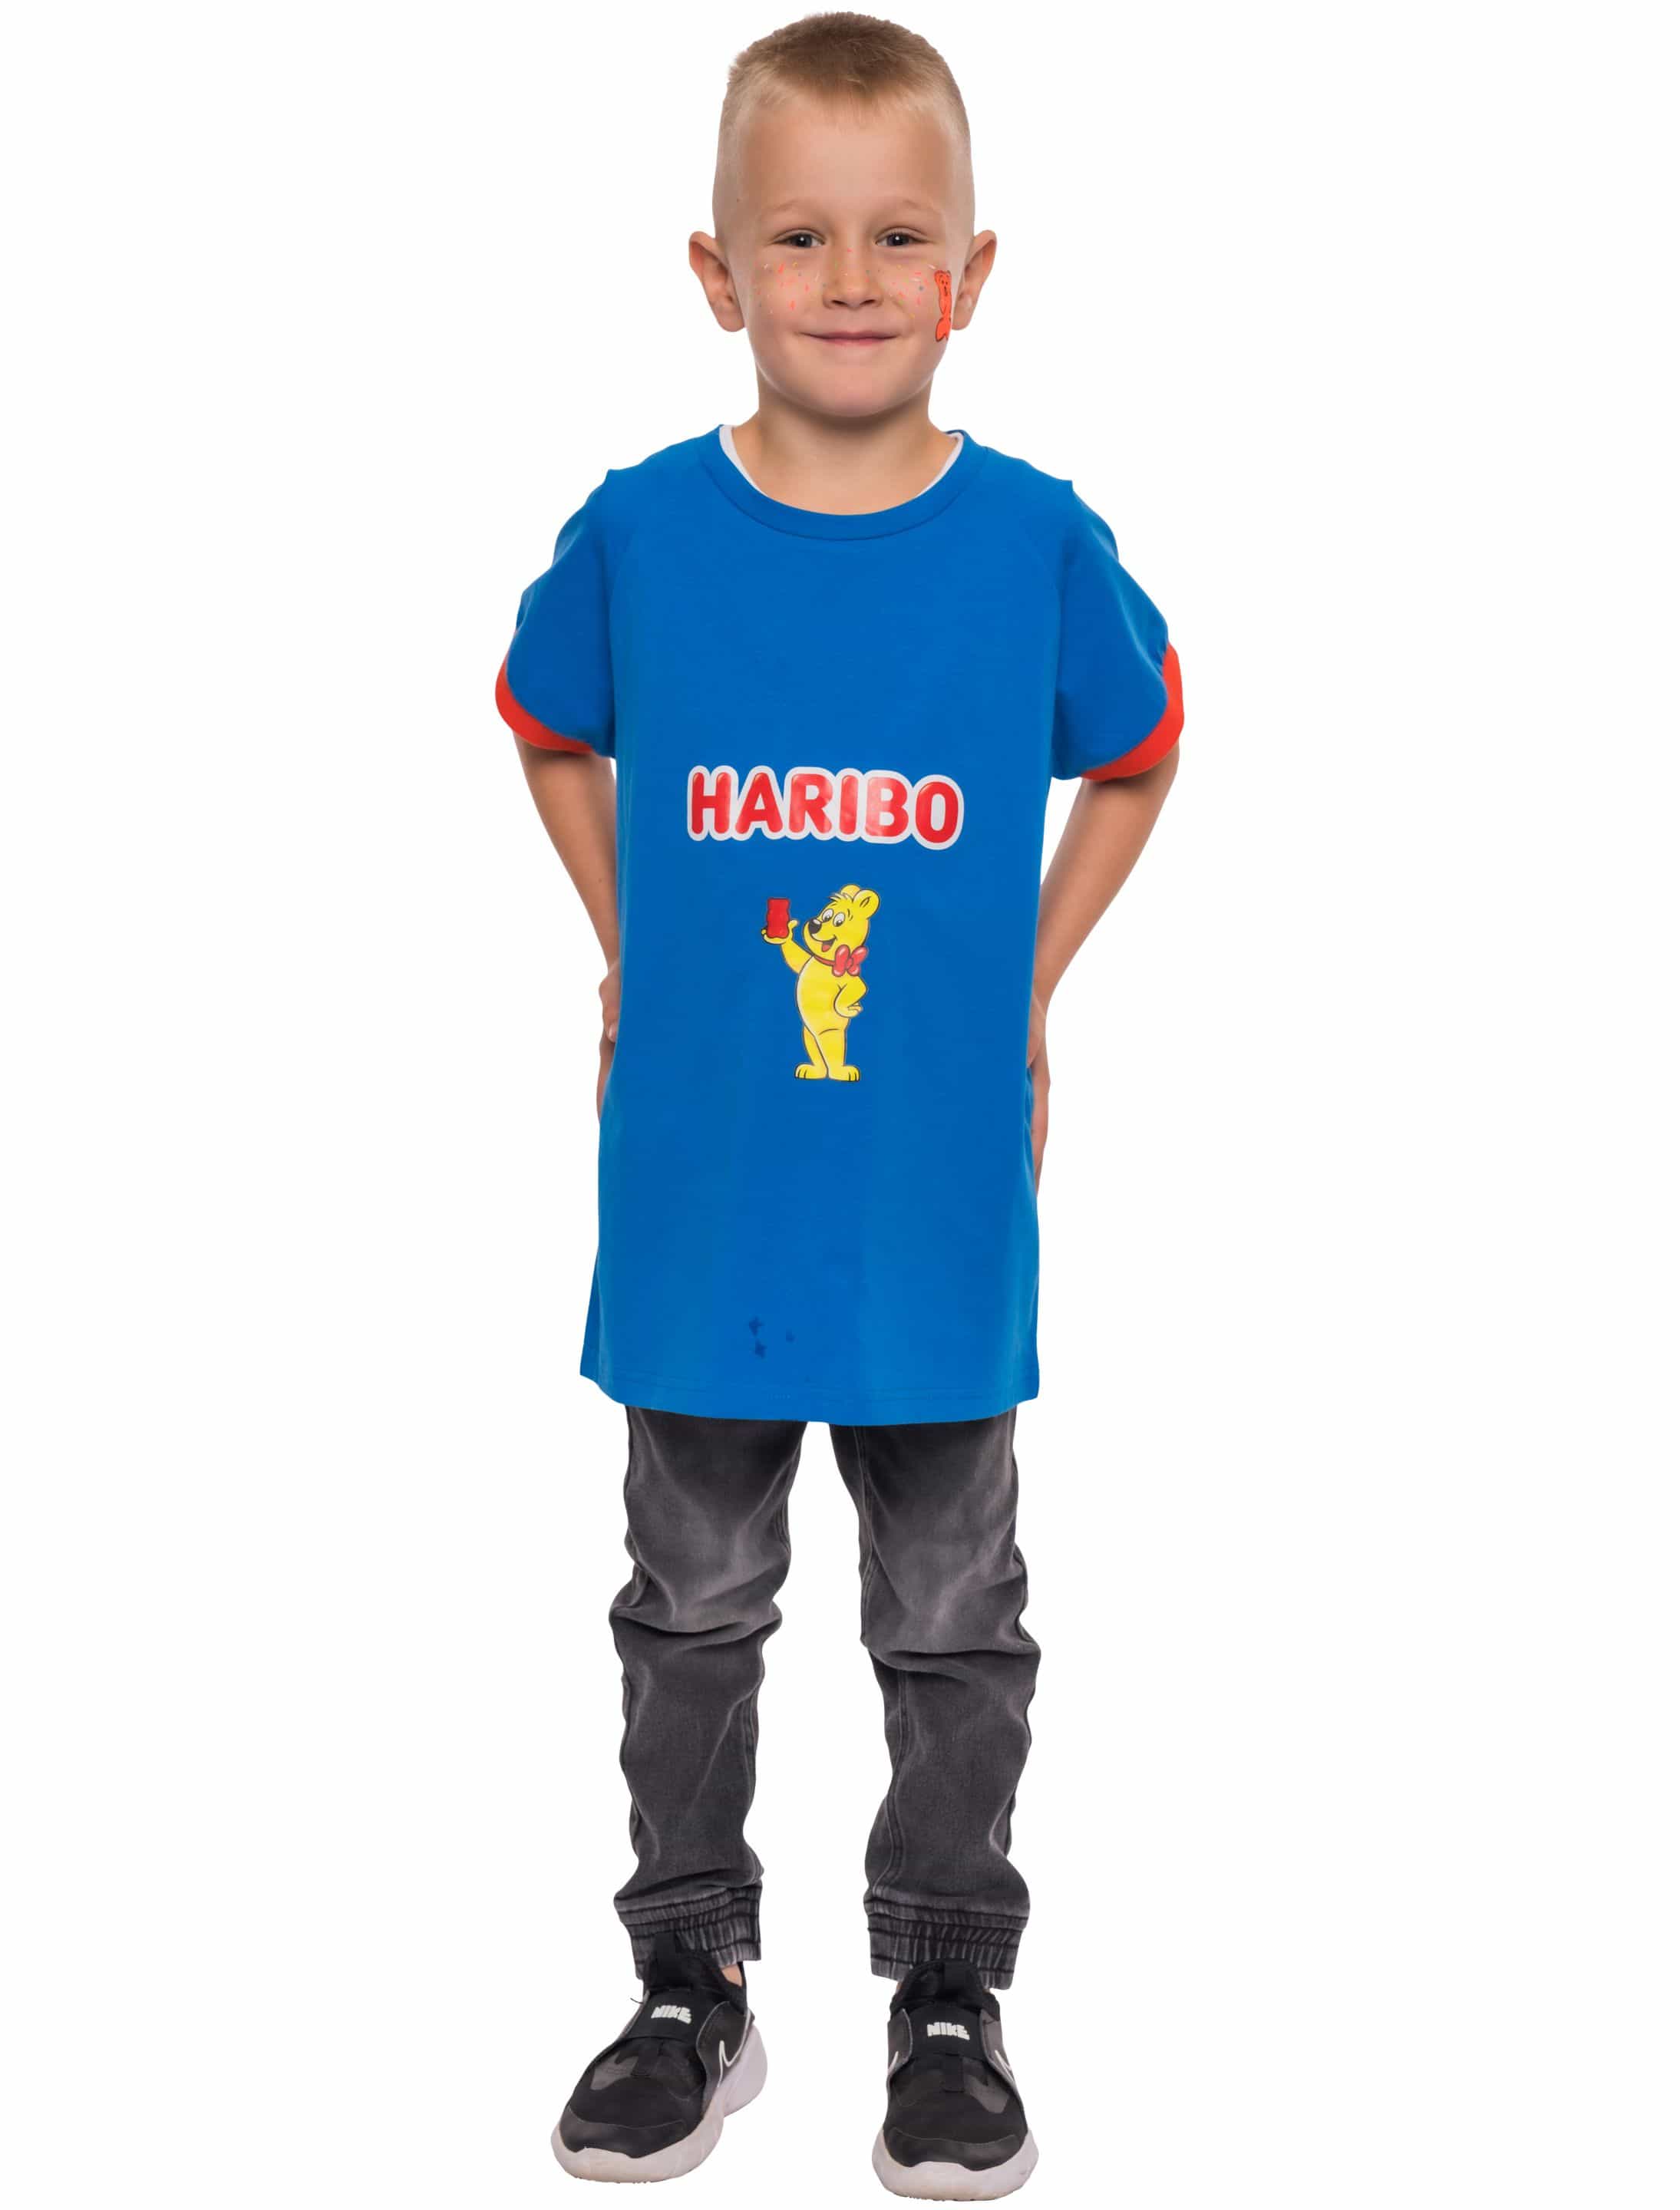 T-Shirt HARIBO Goldbären blau 104